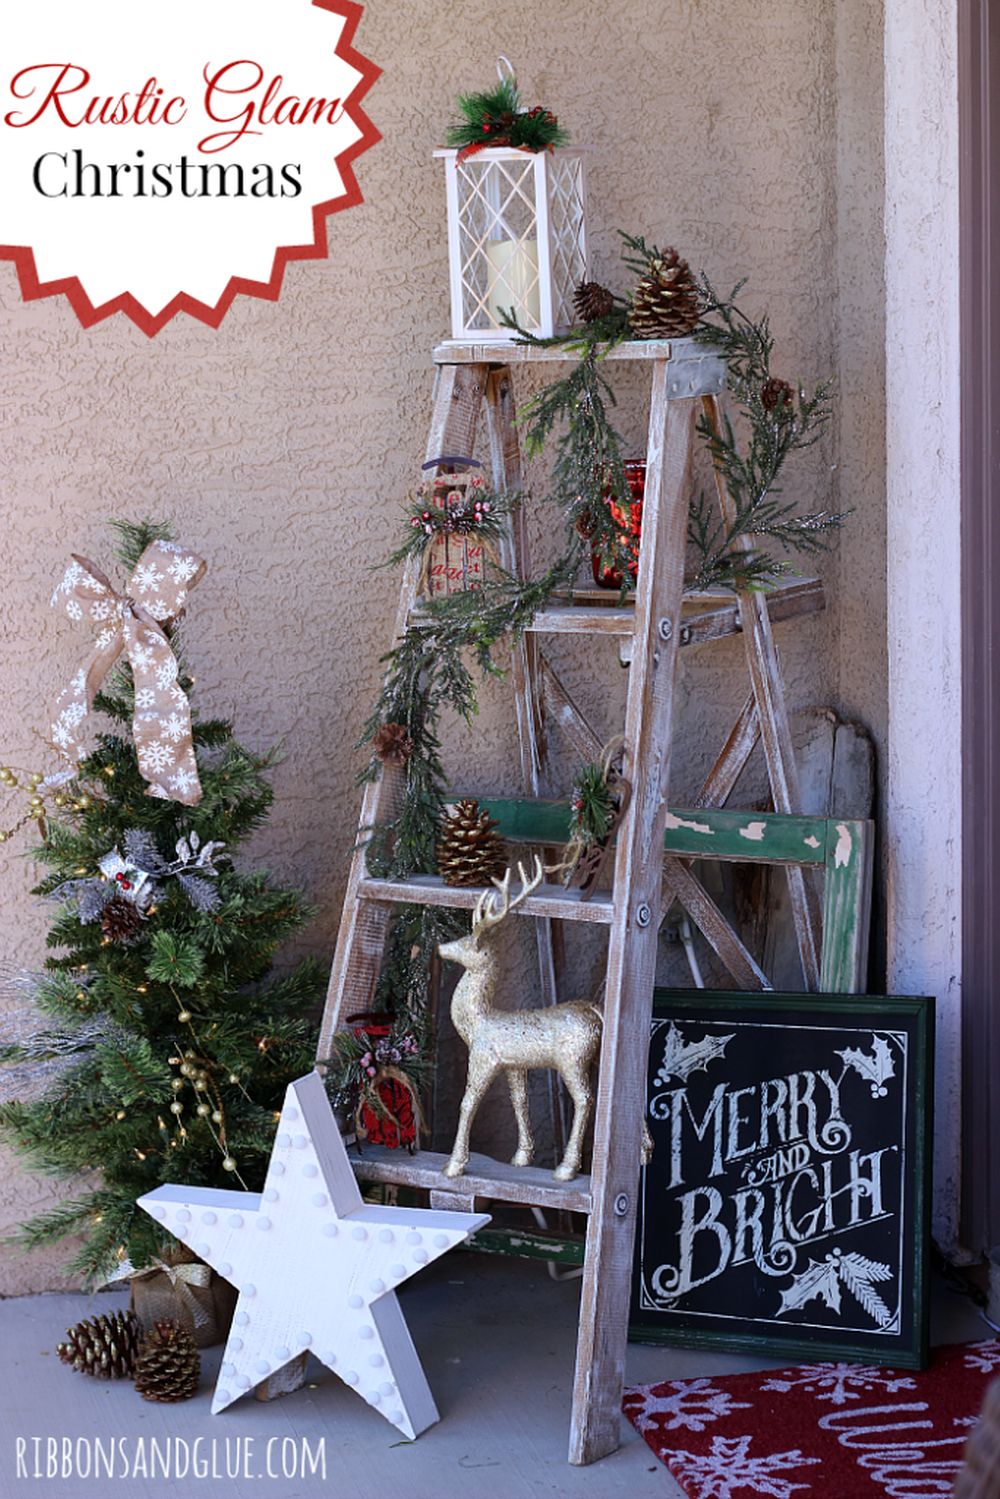 Diy rustic glam christmas ladder decoration lawn decorations